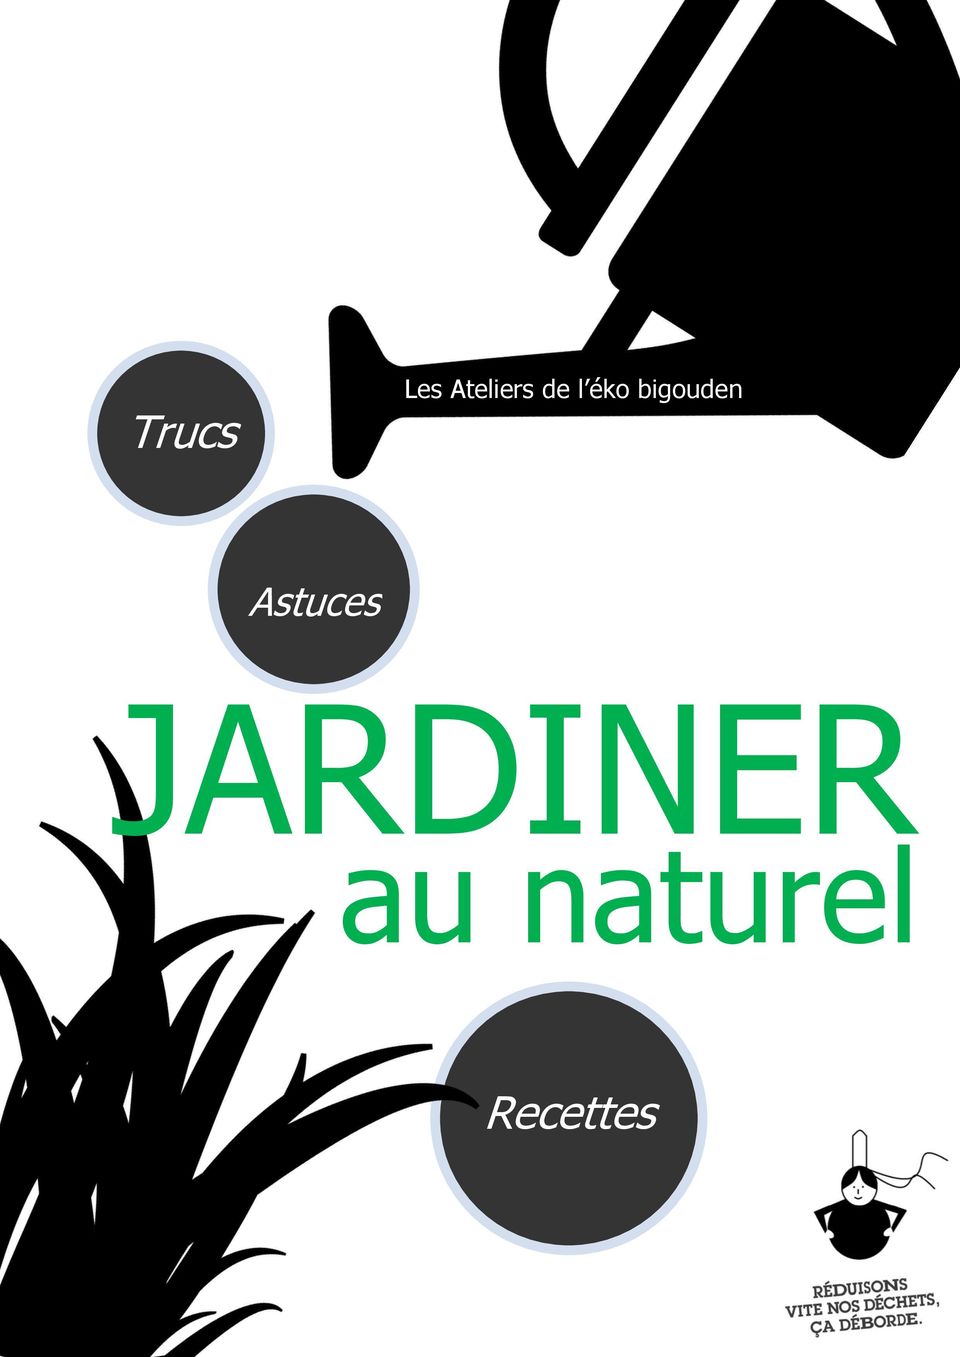 Astuces JARDINER